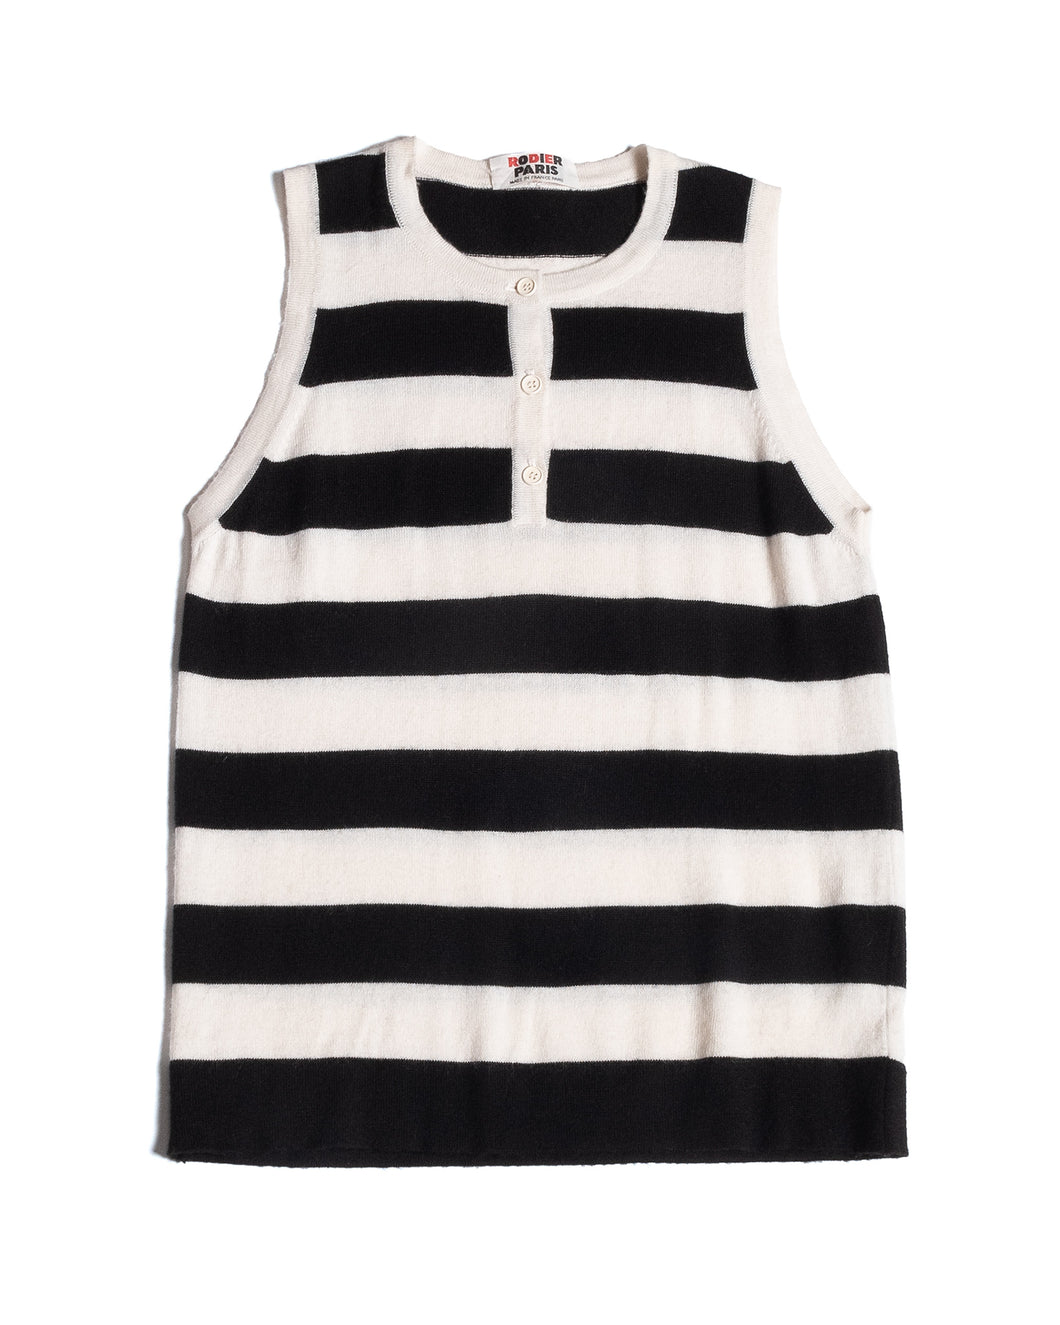 Rodier Paris 90s Black and White Stripe Wool Knit Sleeveless Top